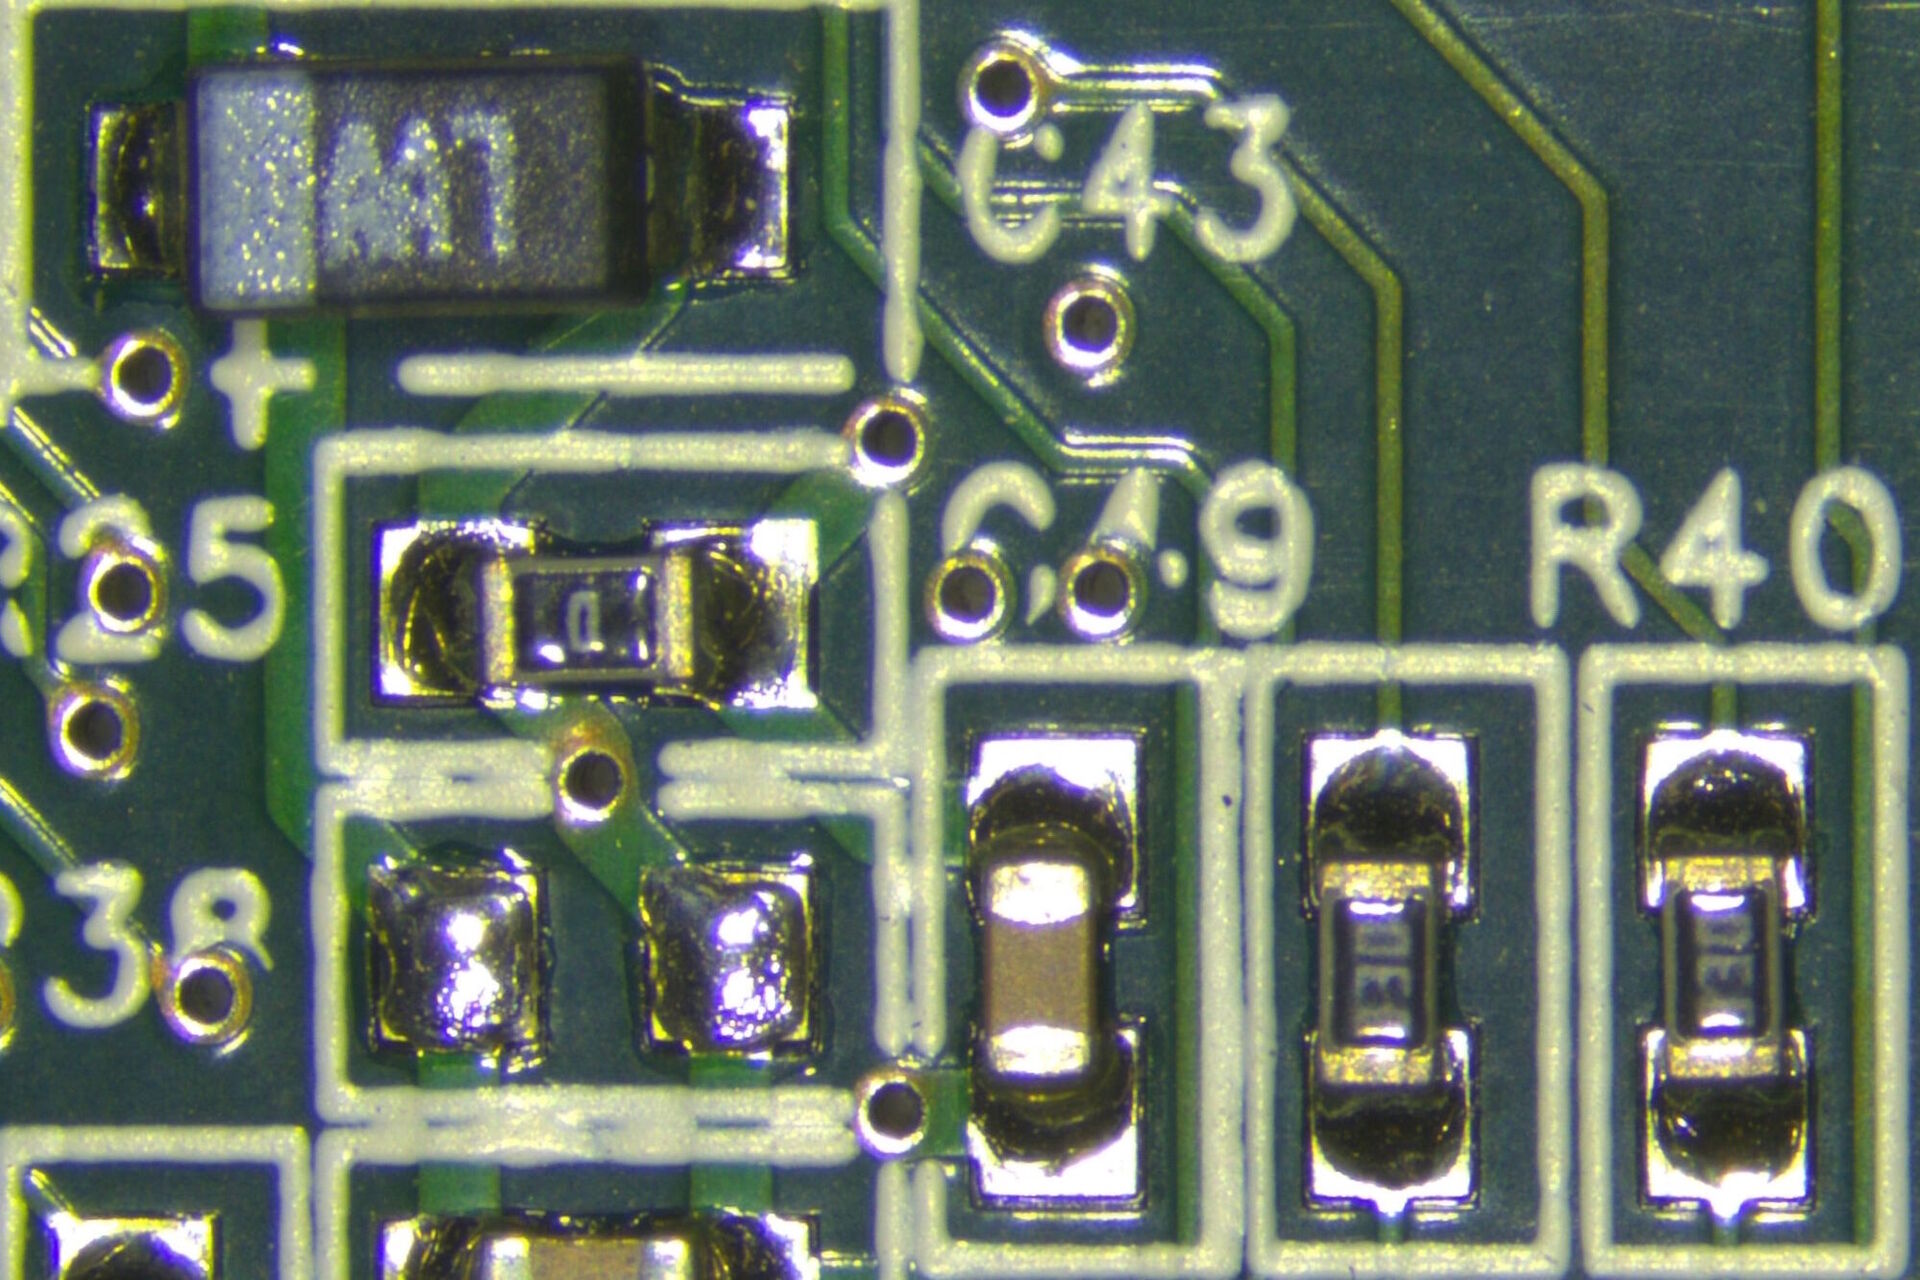 Printed Circuit Board (PCB) - Near Vertical Illumination (NVI): Holes and recesses